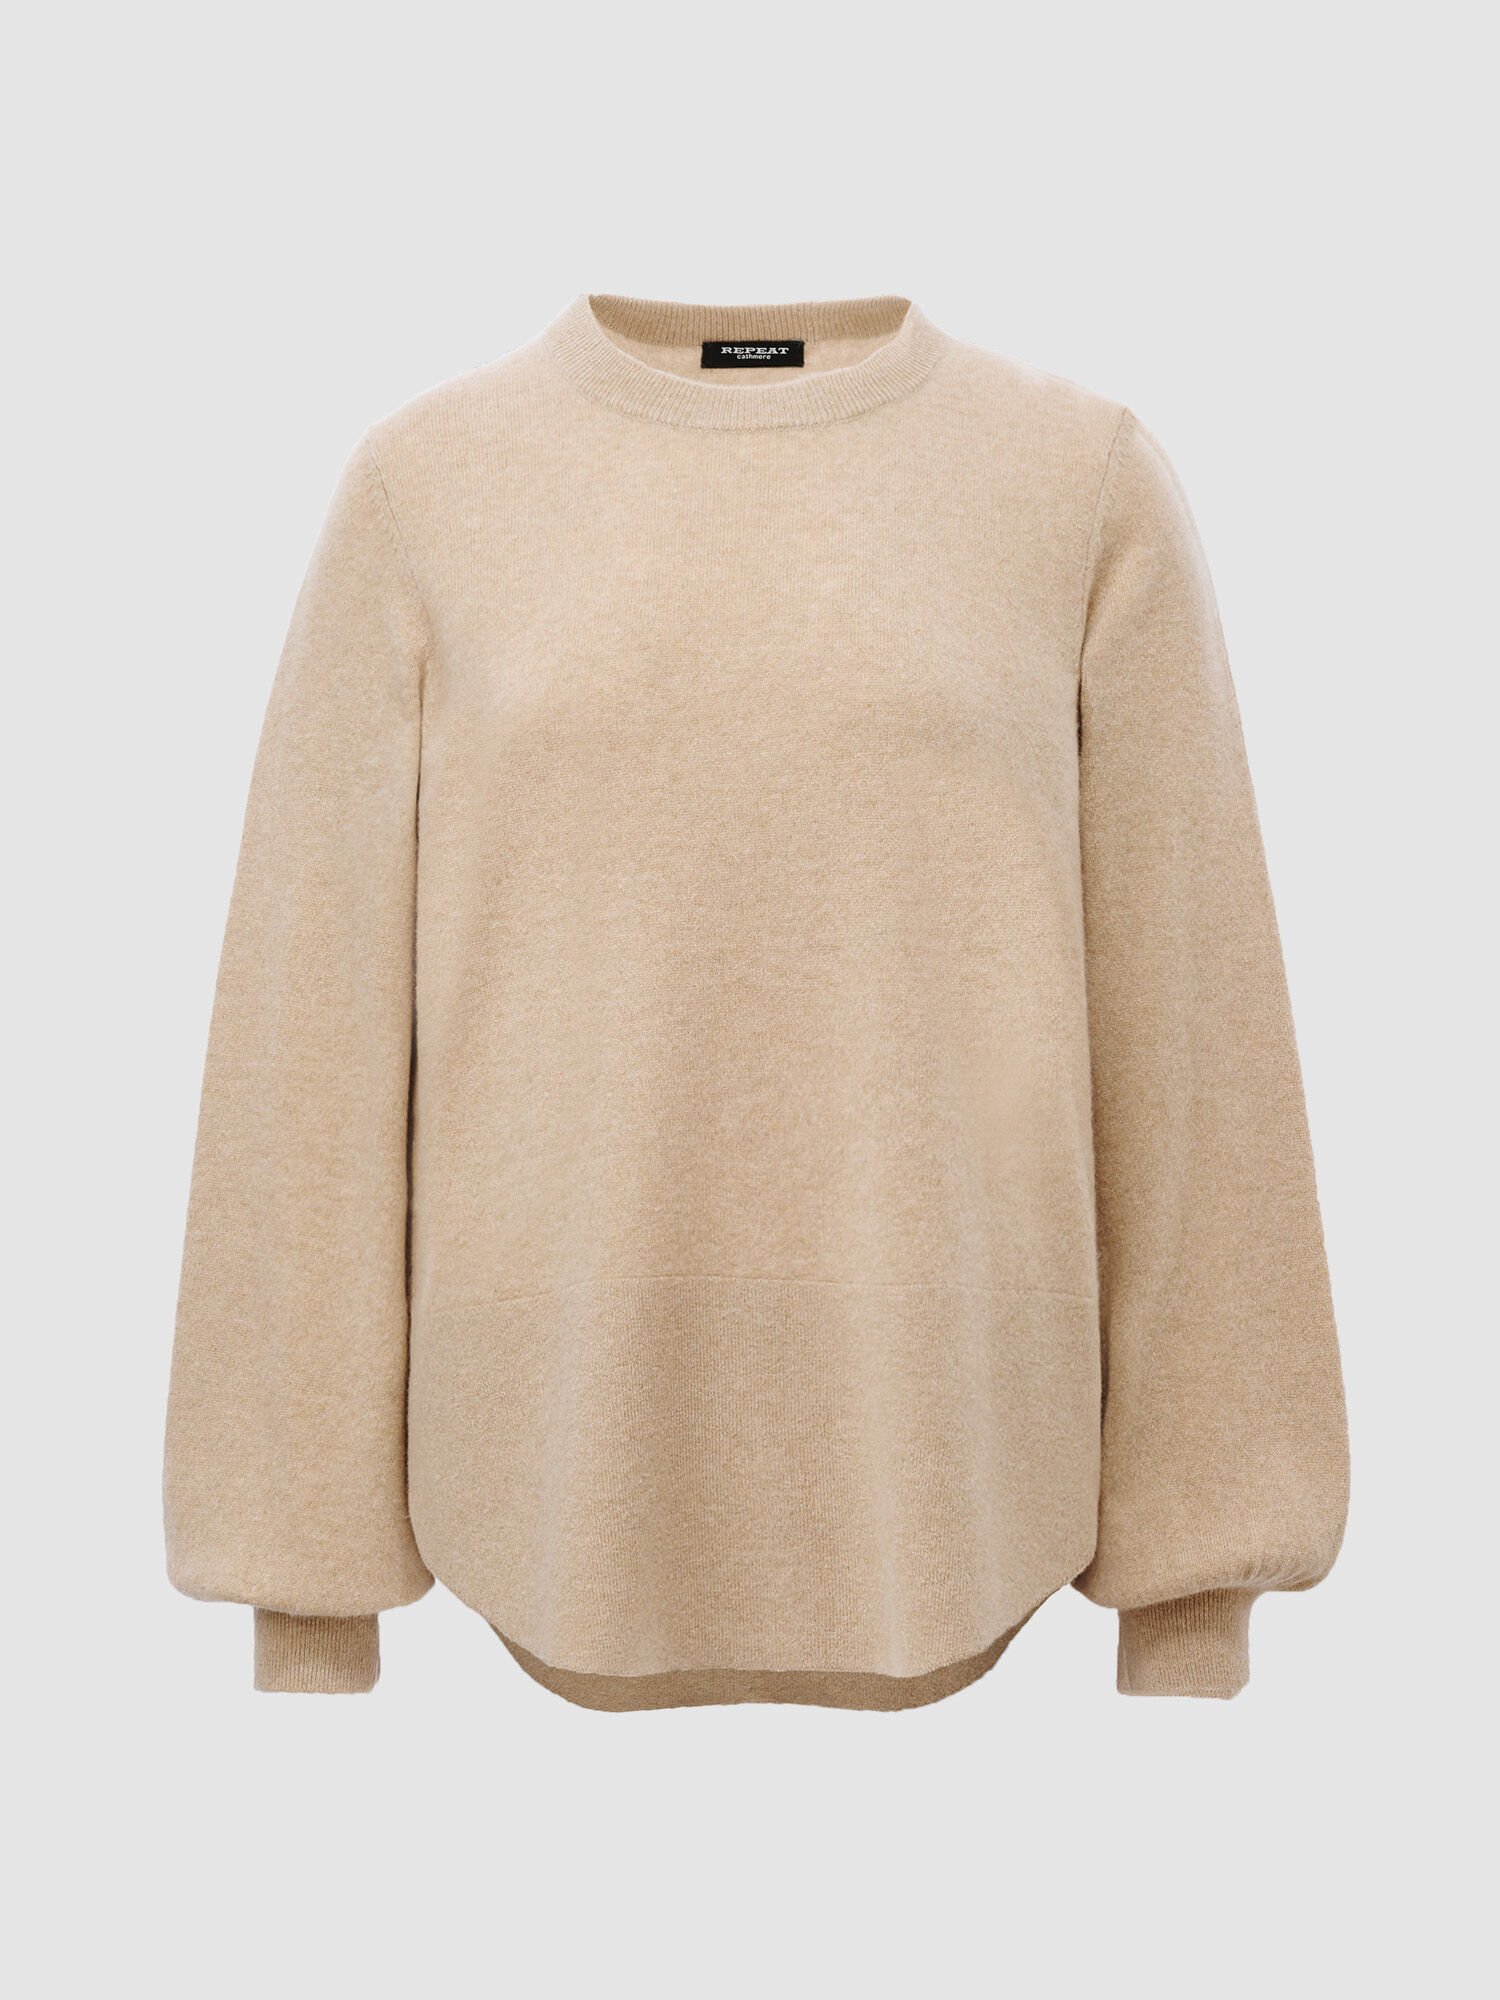 Repeat Cashmere - Cashmere Sweater